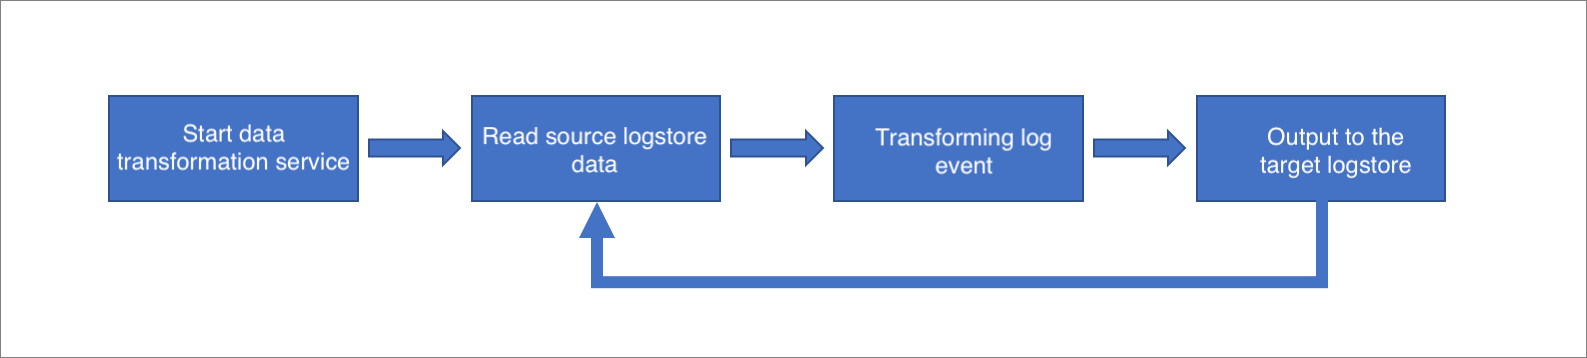 Data transformation process